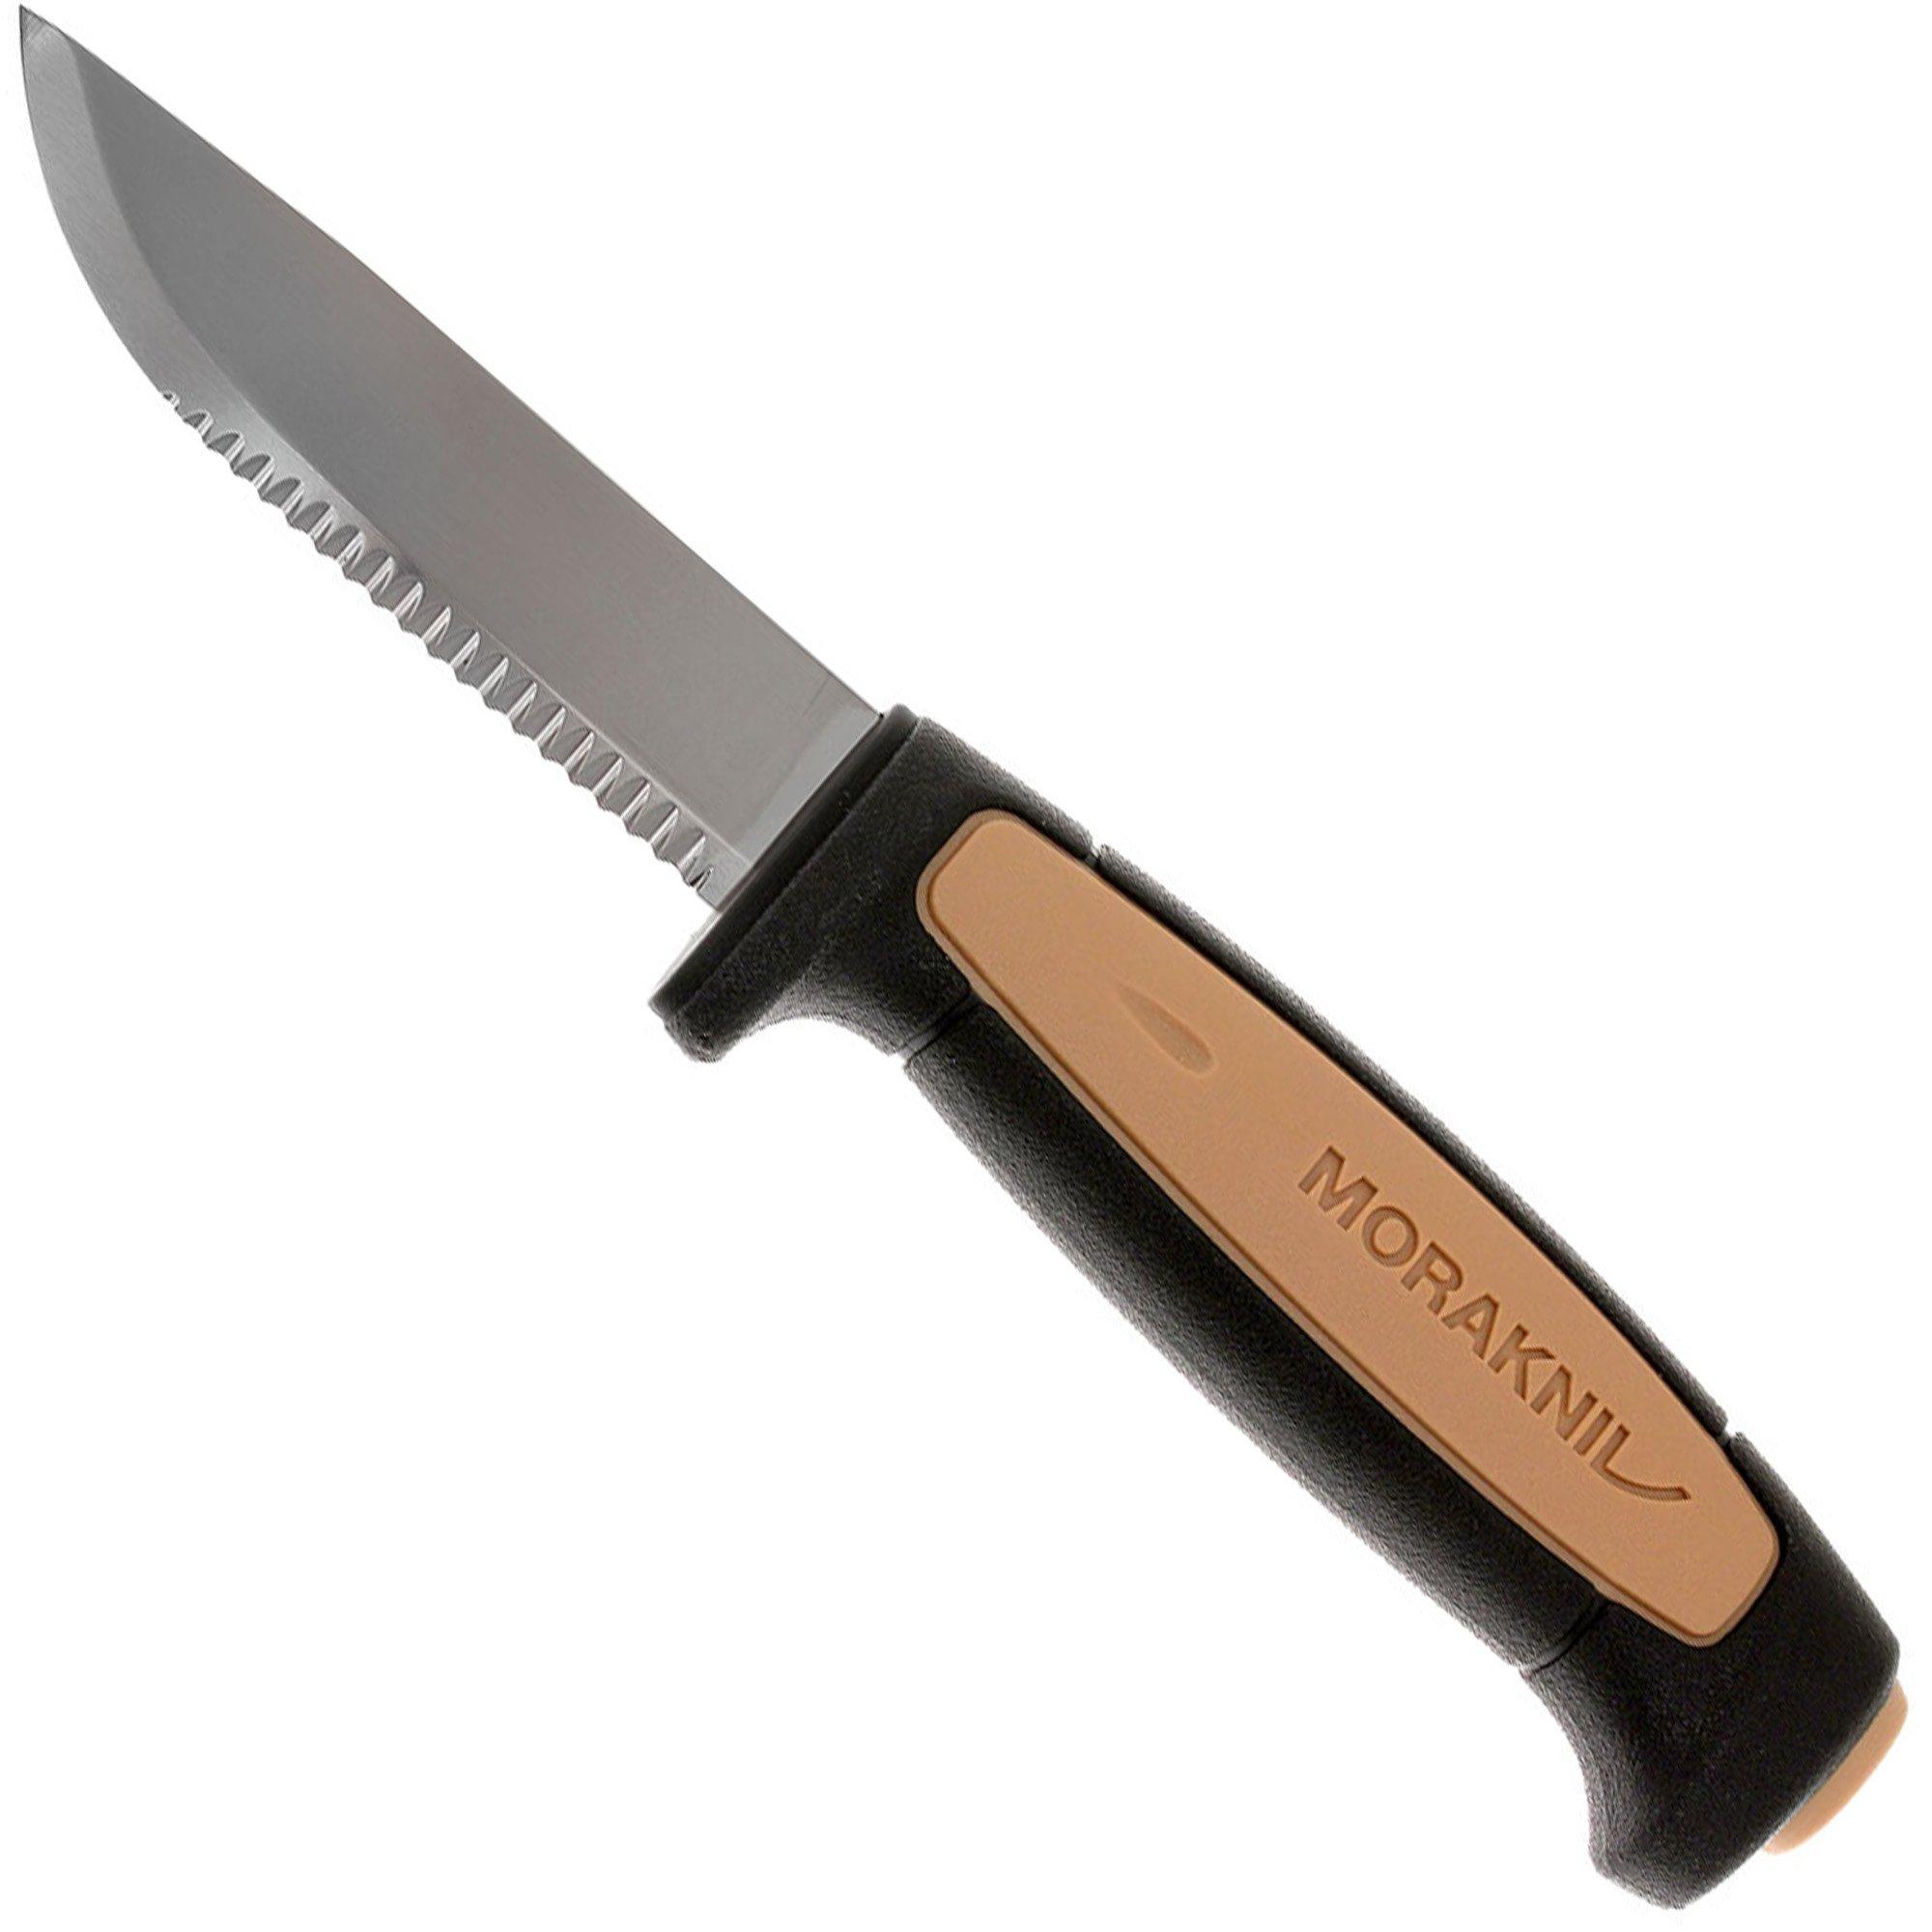 Mora Garberg Black Carbon bushcraft knife 13716 Polymer sheath